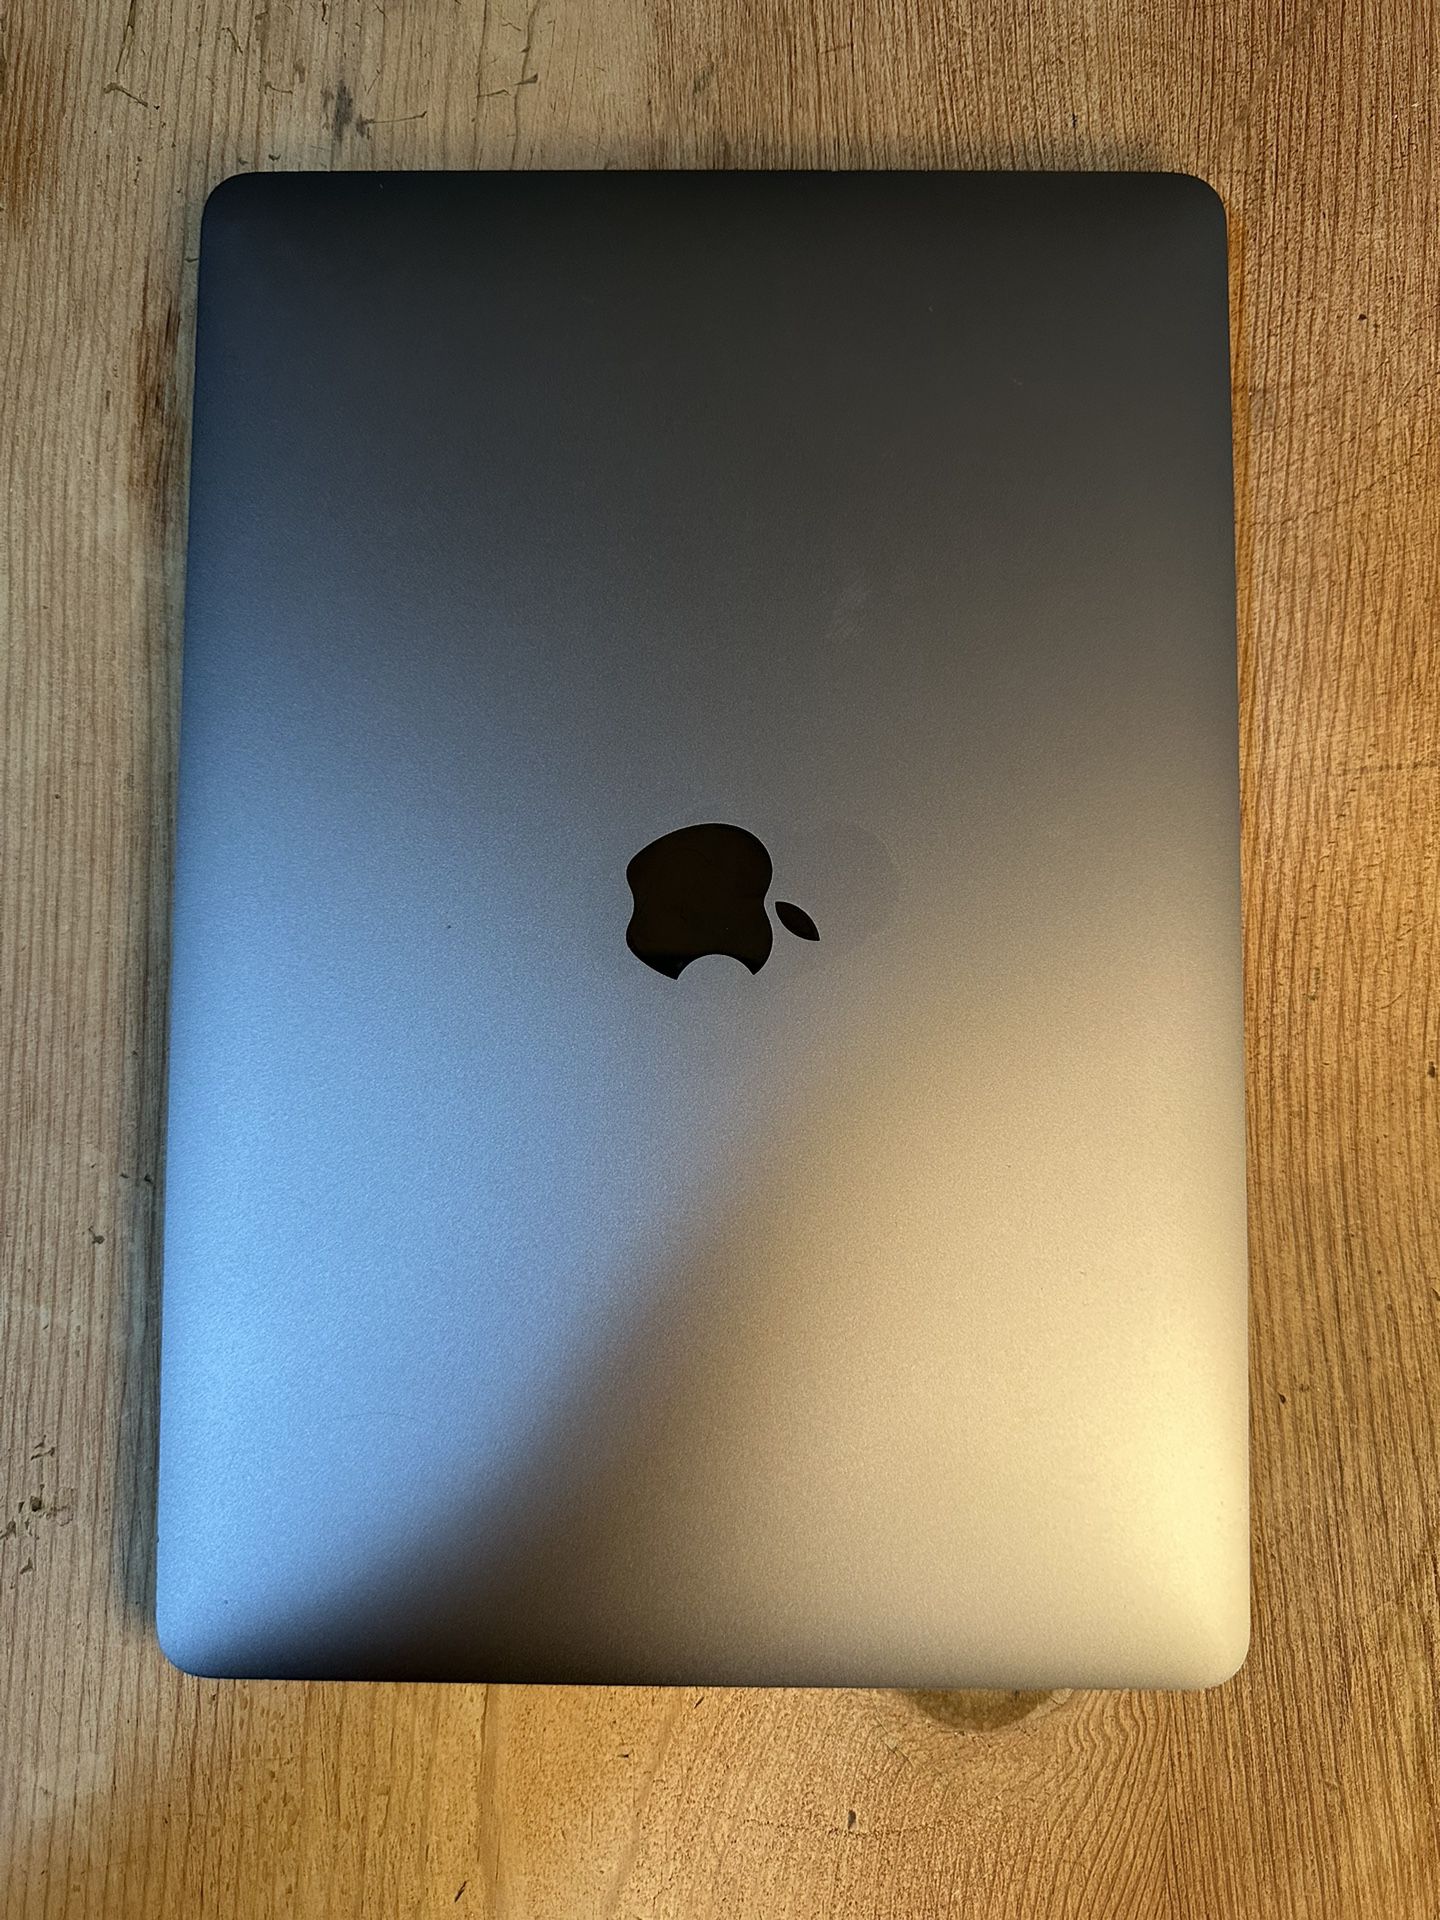 MacBook Pro 13” inches (2019)